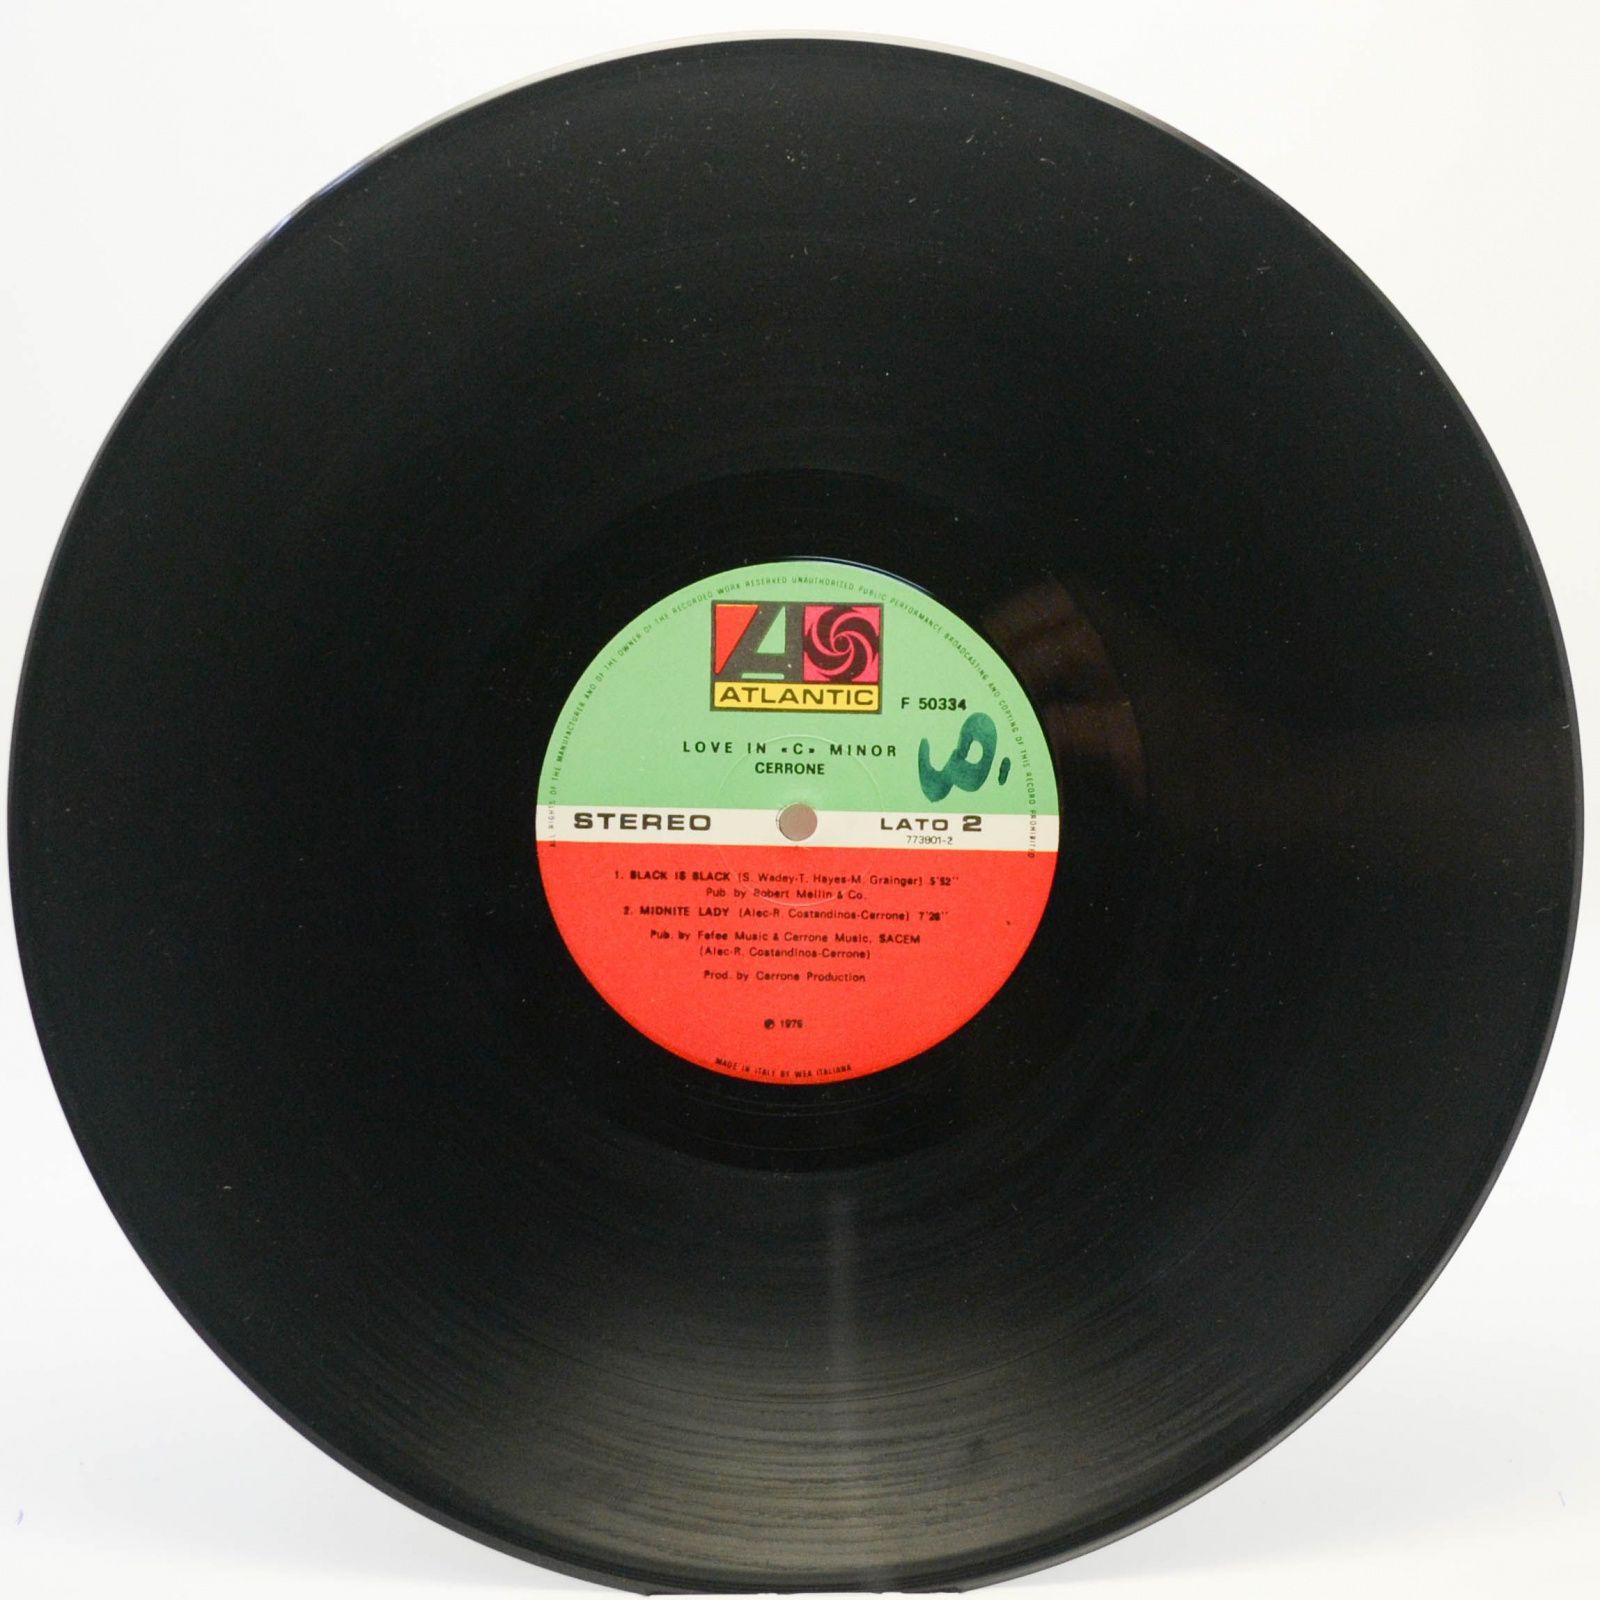 Cerrone — Love In C Minor, 1976